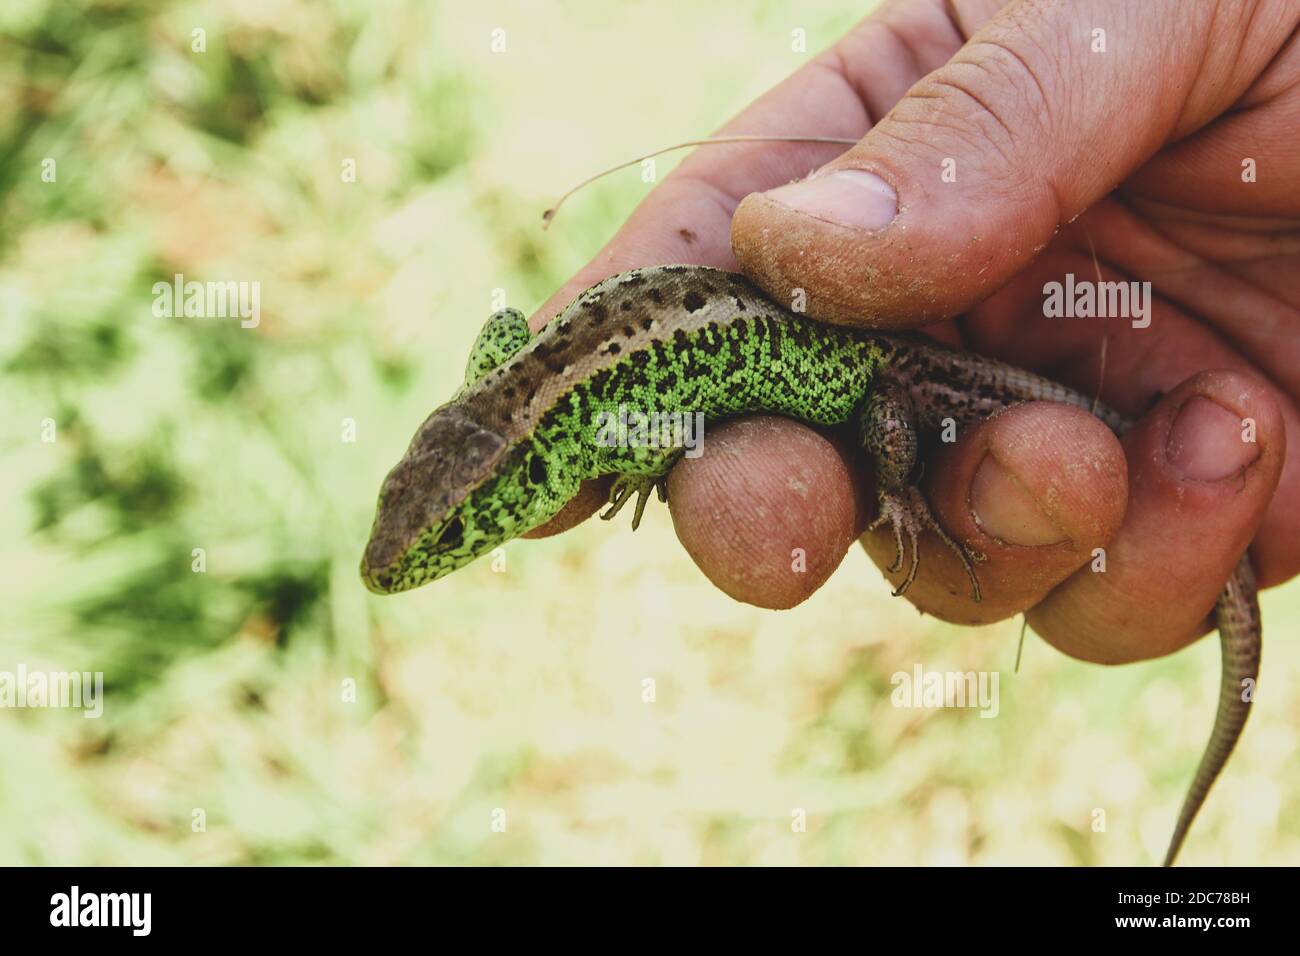 A lizard in a man's hand Stock Photo